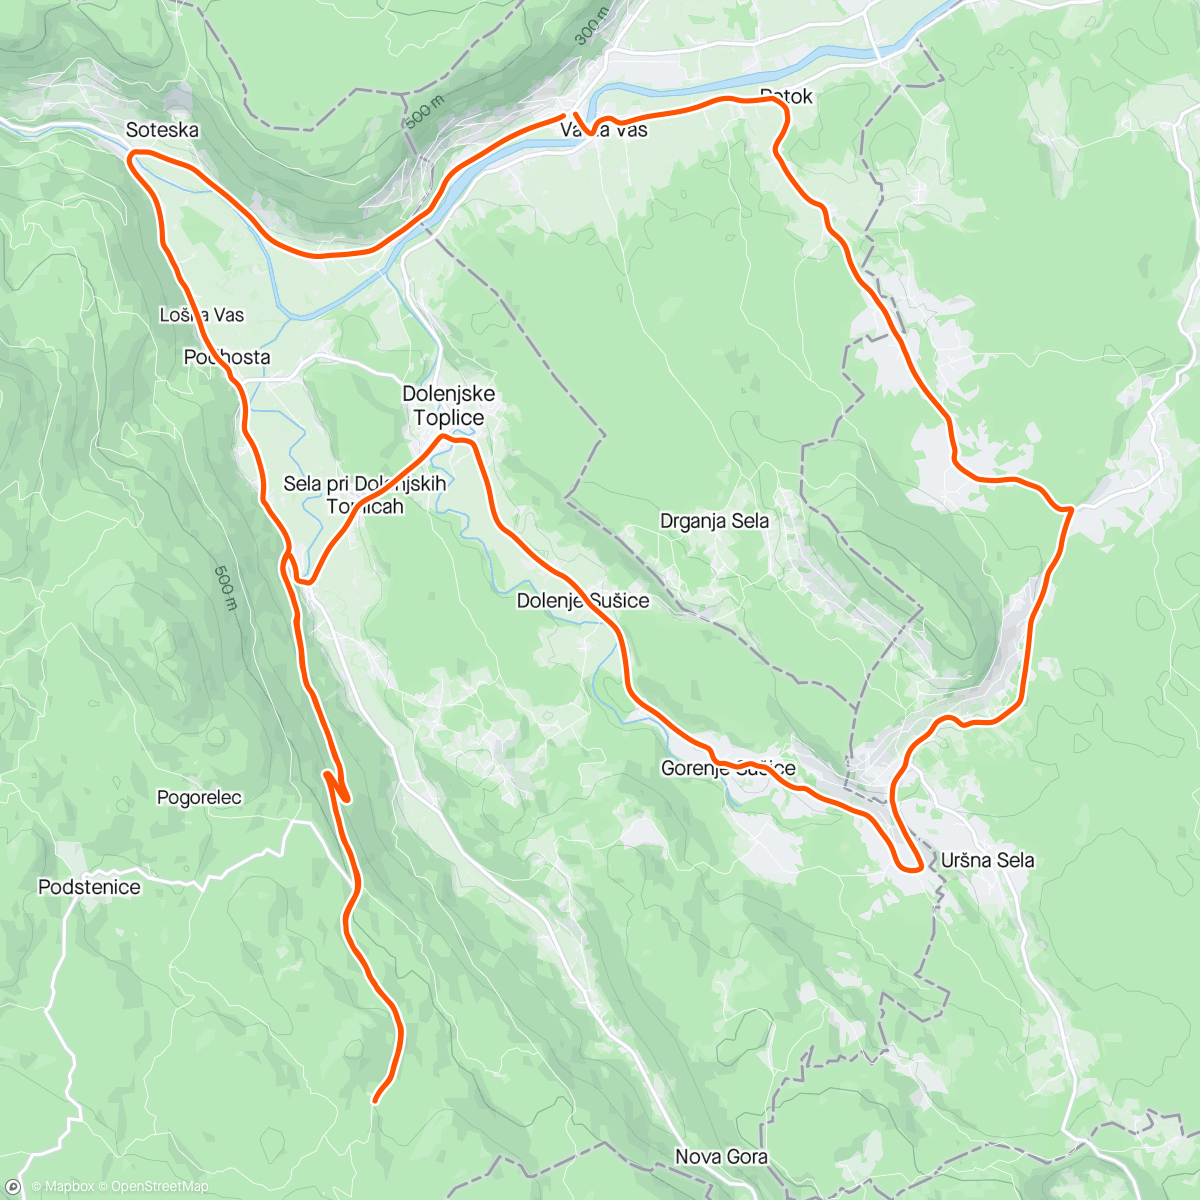 Map of the activity, Baza 20 #1 
+ Uršna sela